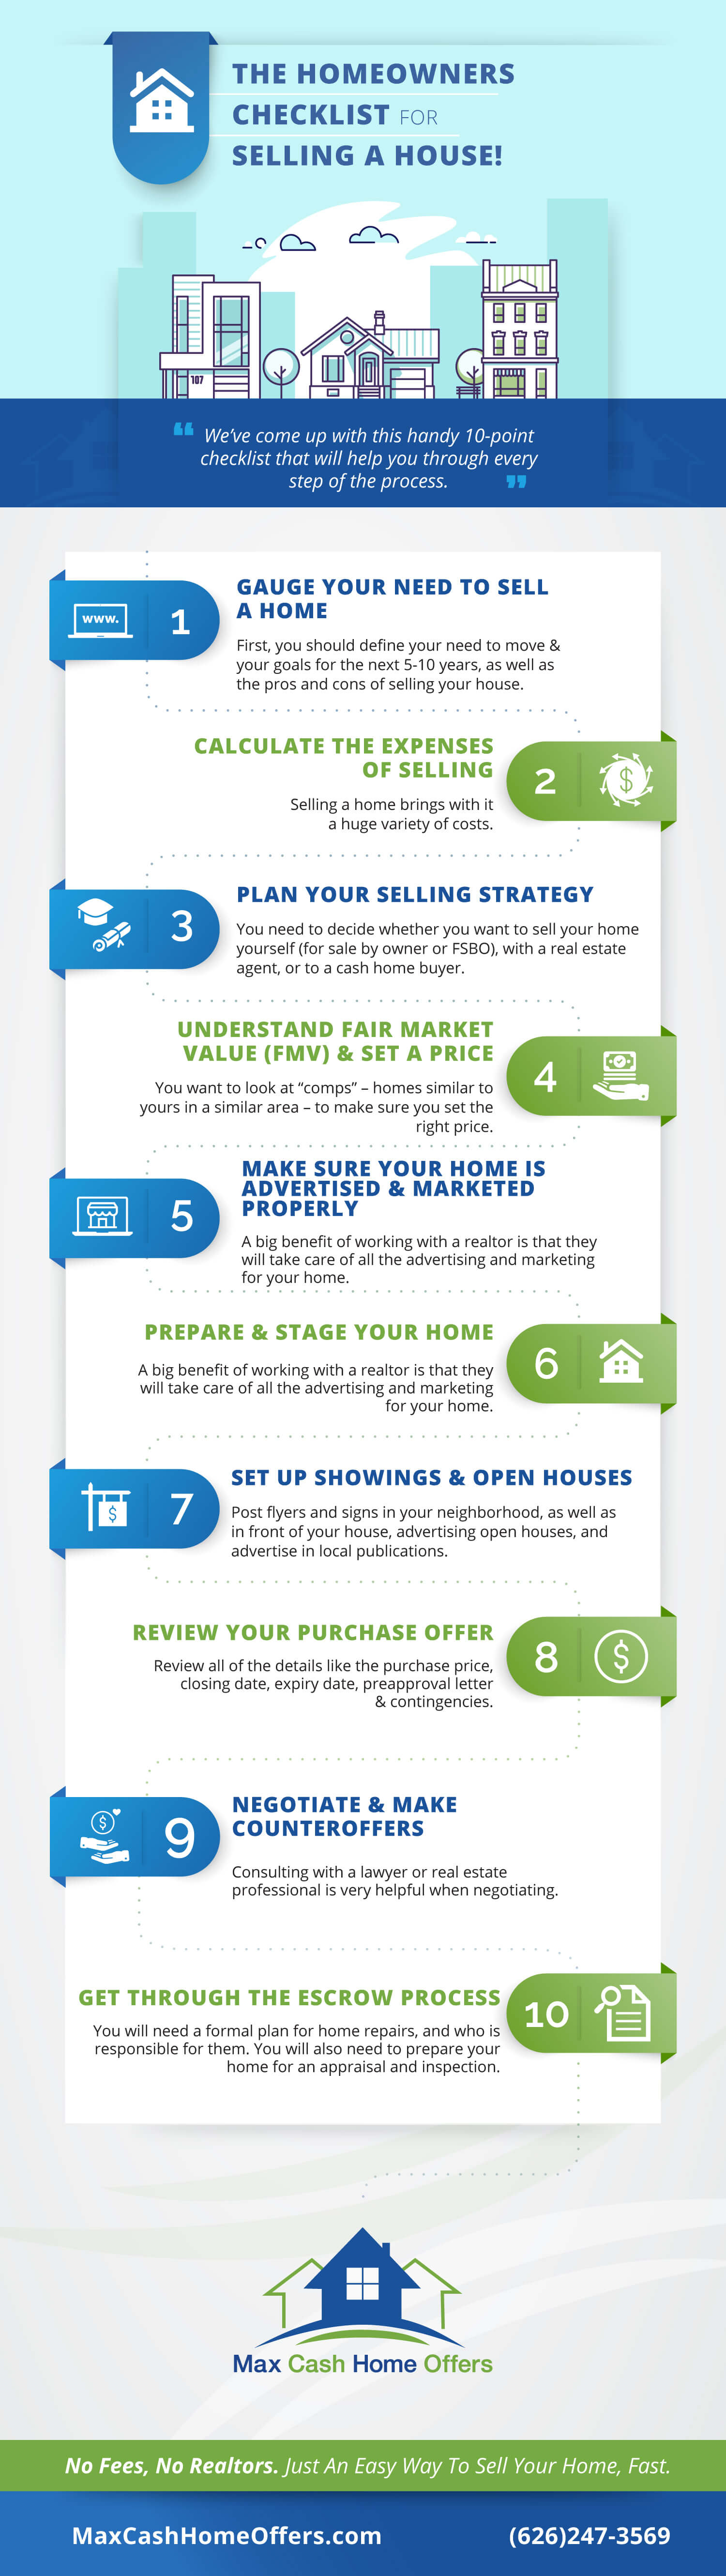 homeowners checklist